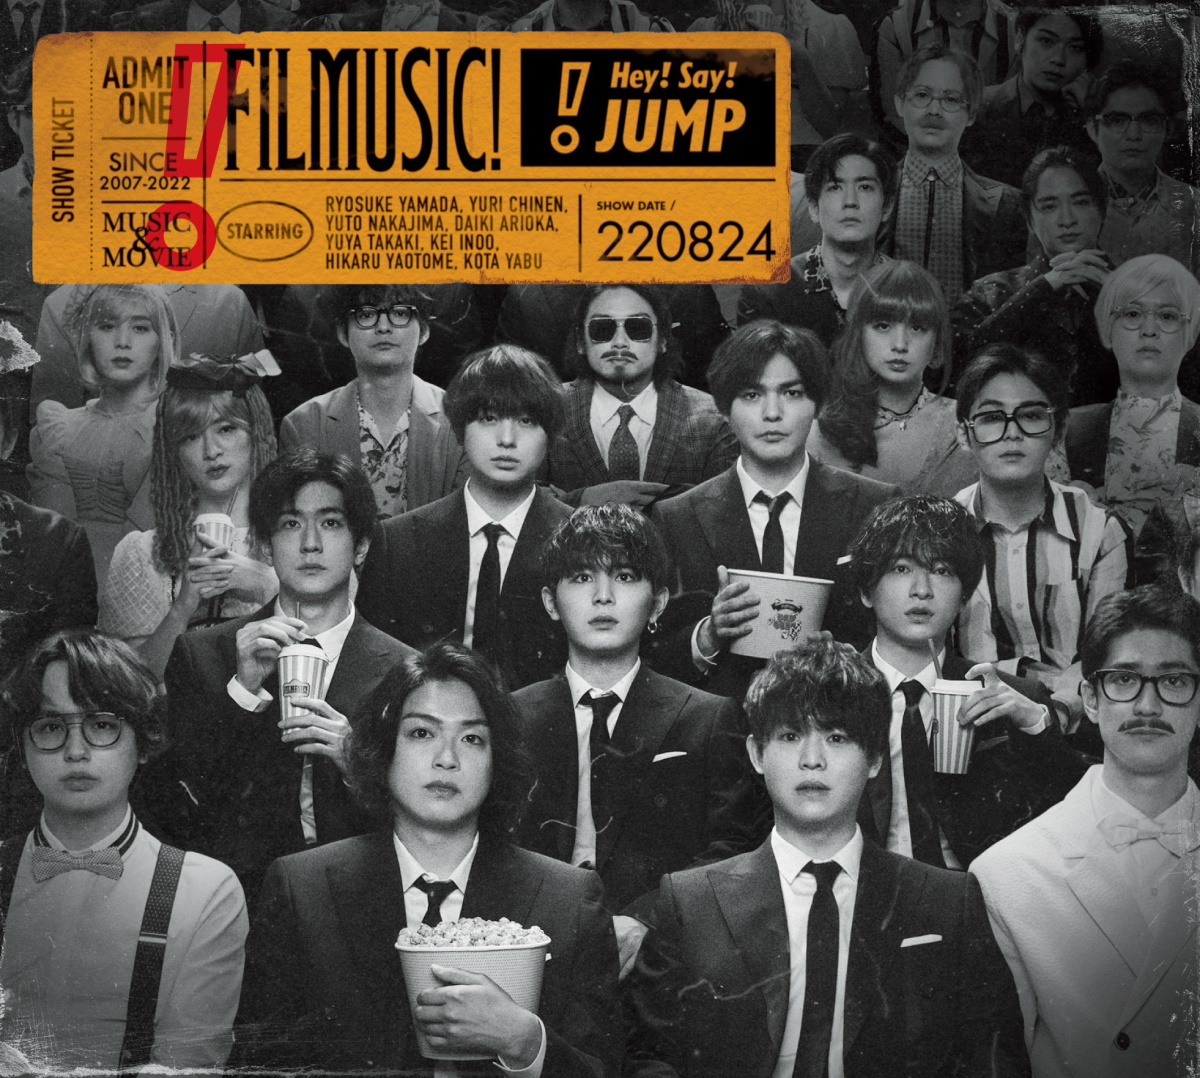 『Hey! Say! JUMP - サンダーソニア』収録の『FILMUSIC!』ジャケット